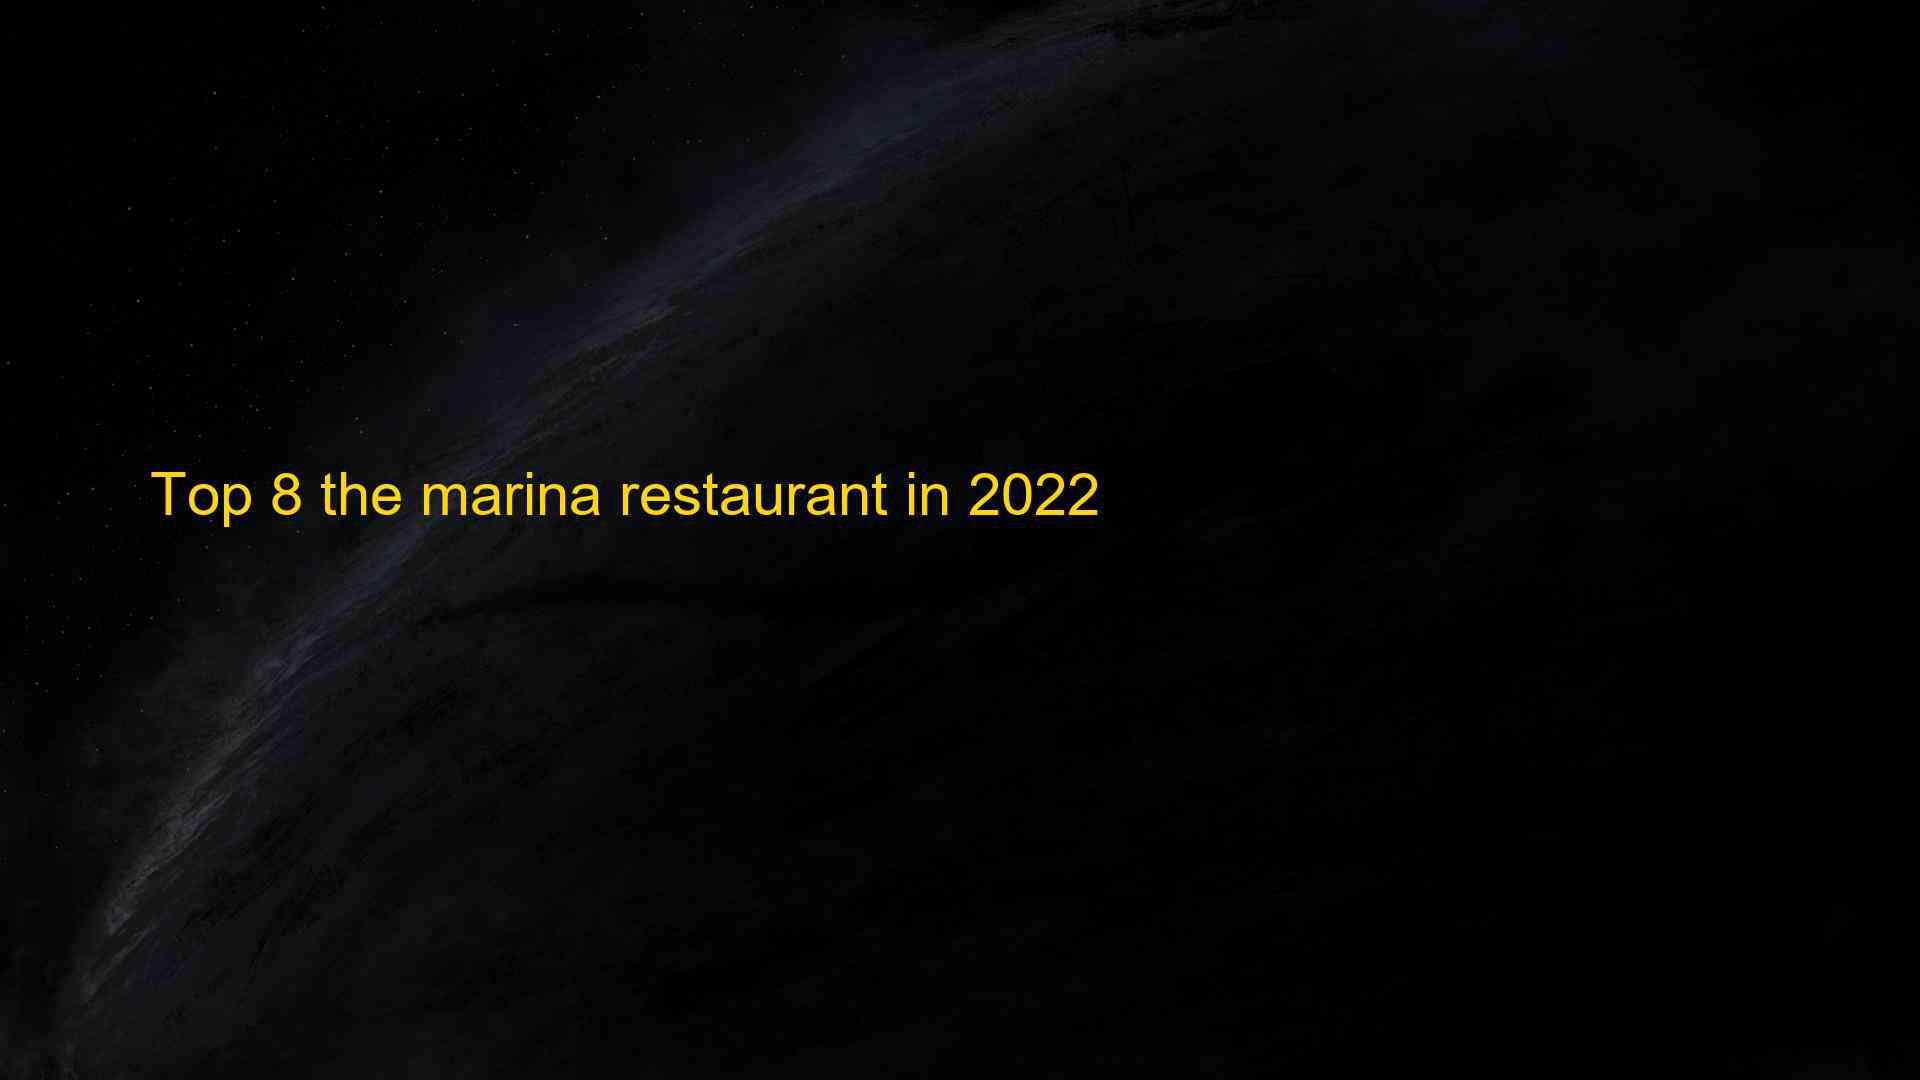 Top 8 the marina restaurant in 2022 1662897793